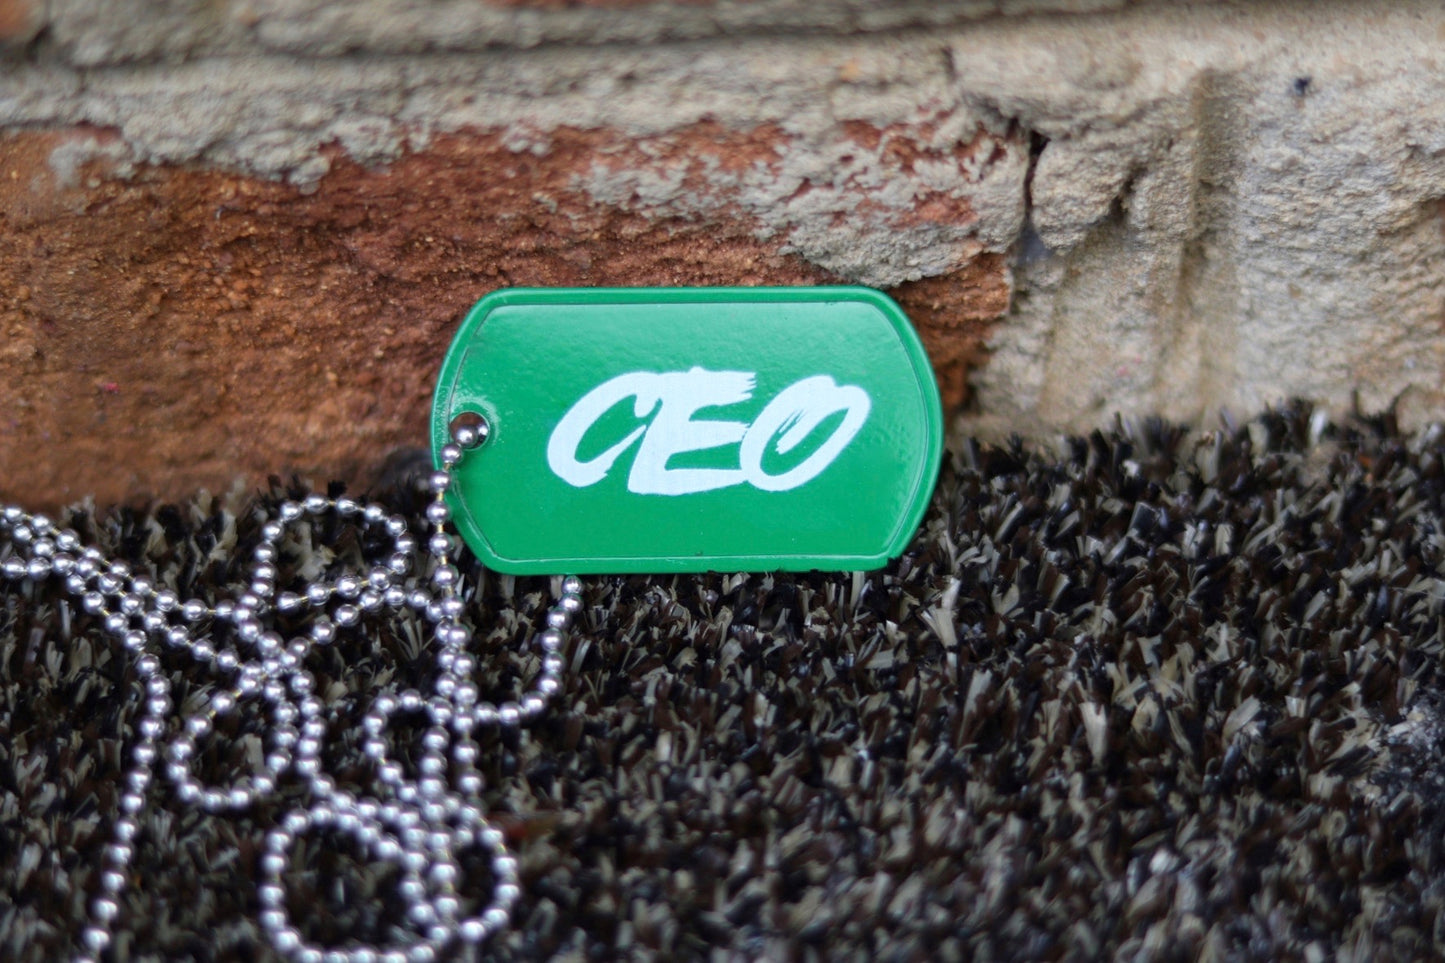 CEO Dog tag